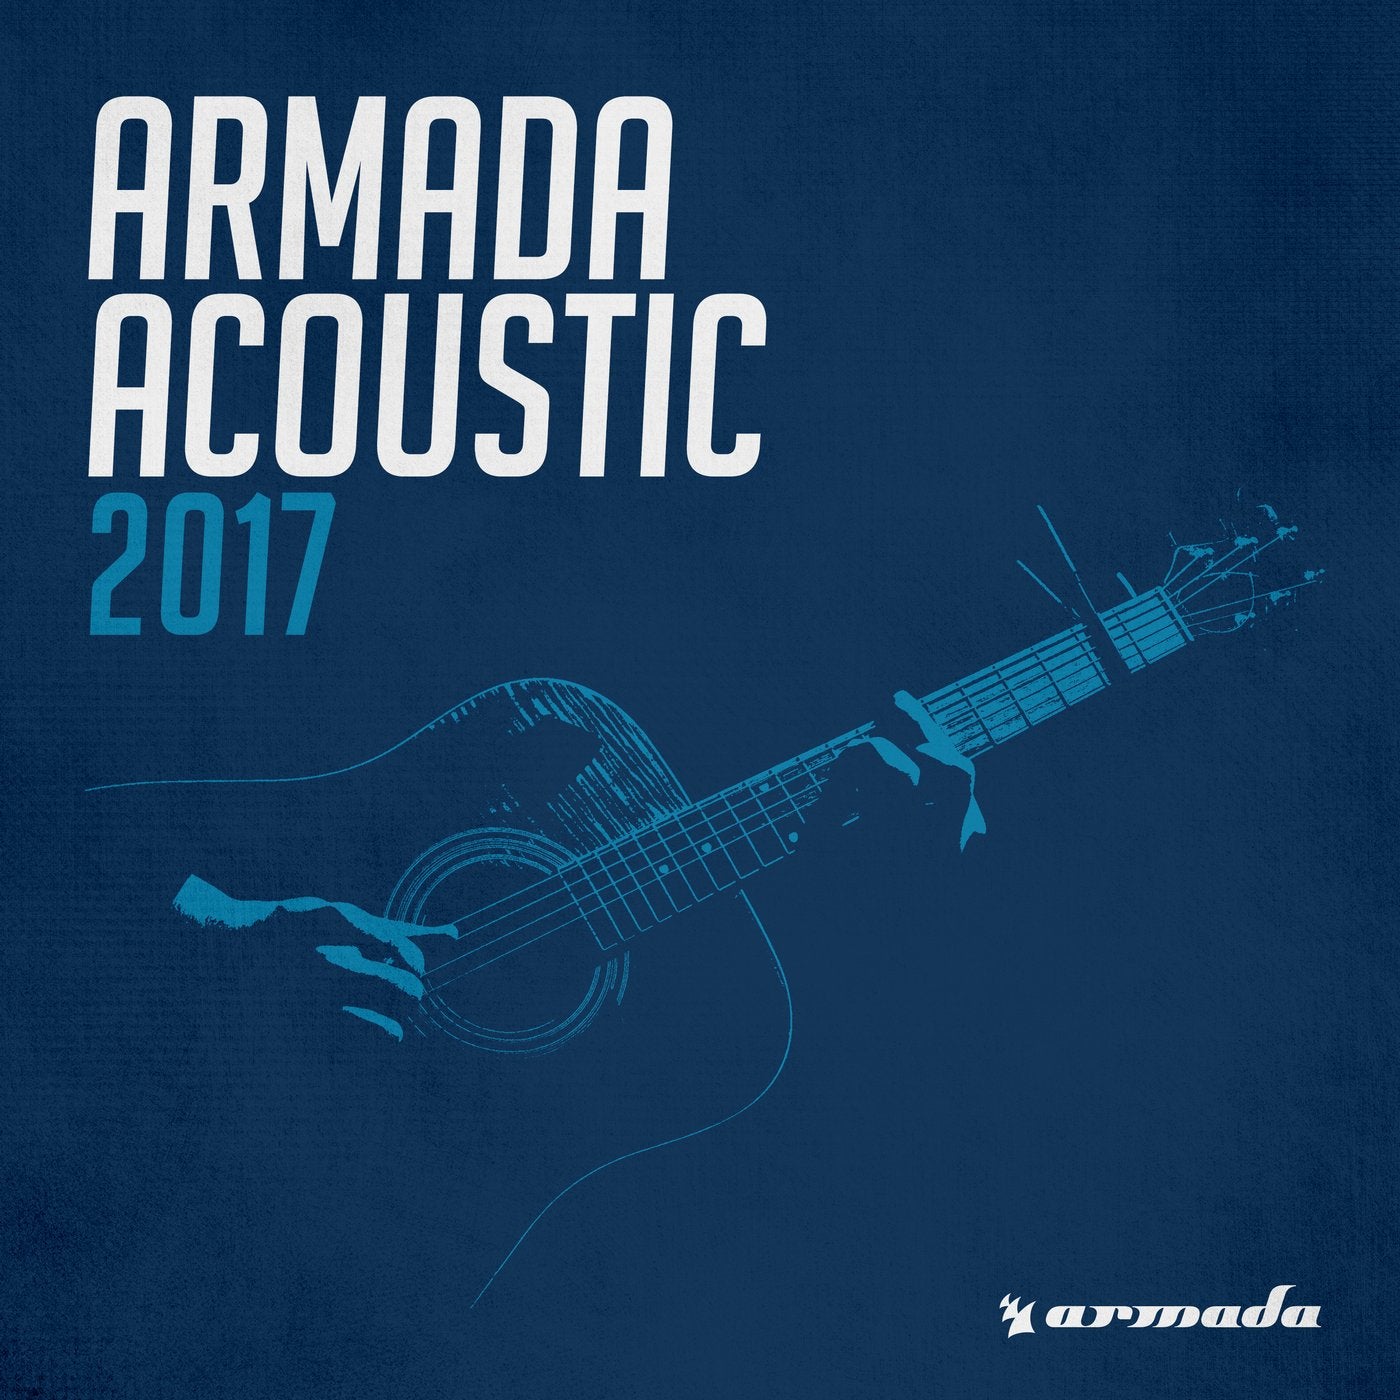 Armada Acoustic 2017